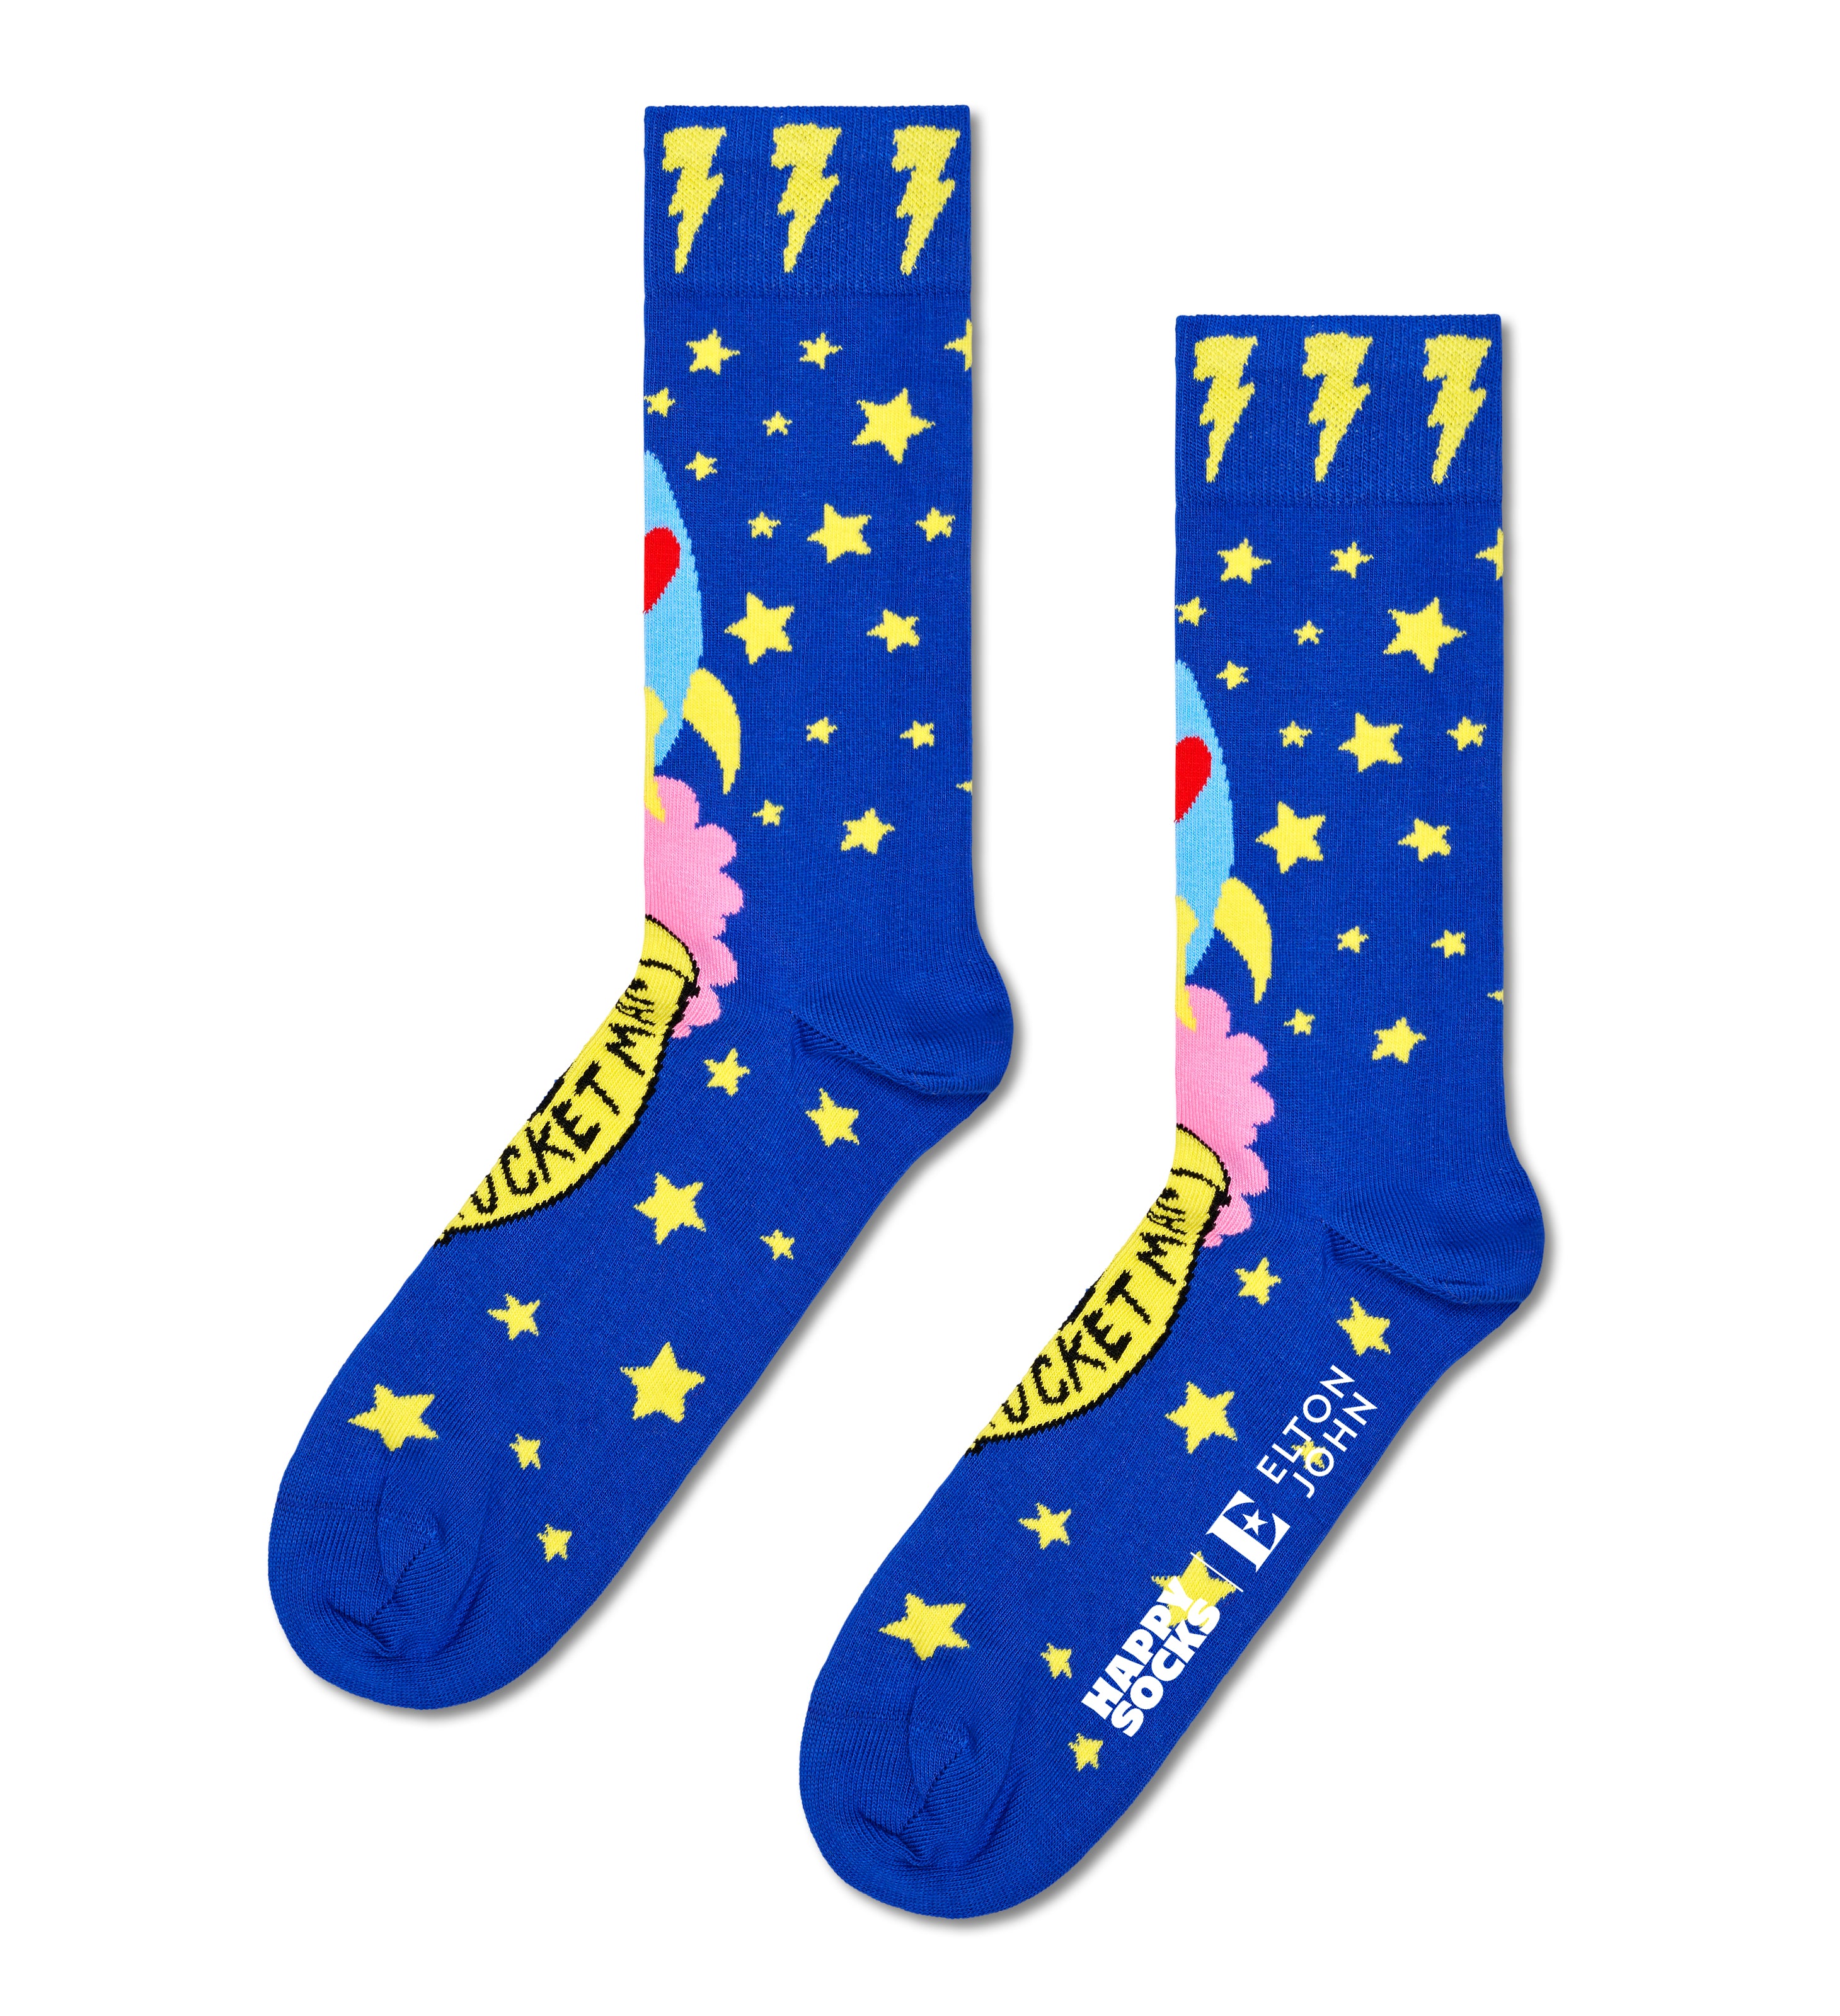 Elton John - Elton John x Happy Socks 6-Pack Gift Set